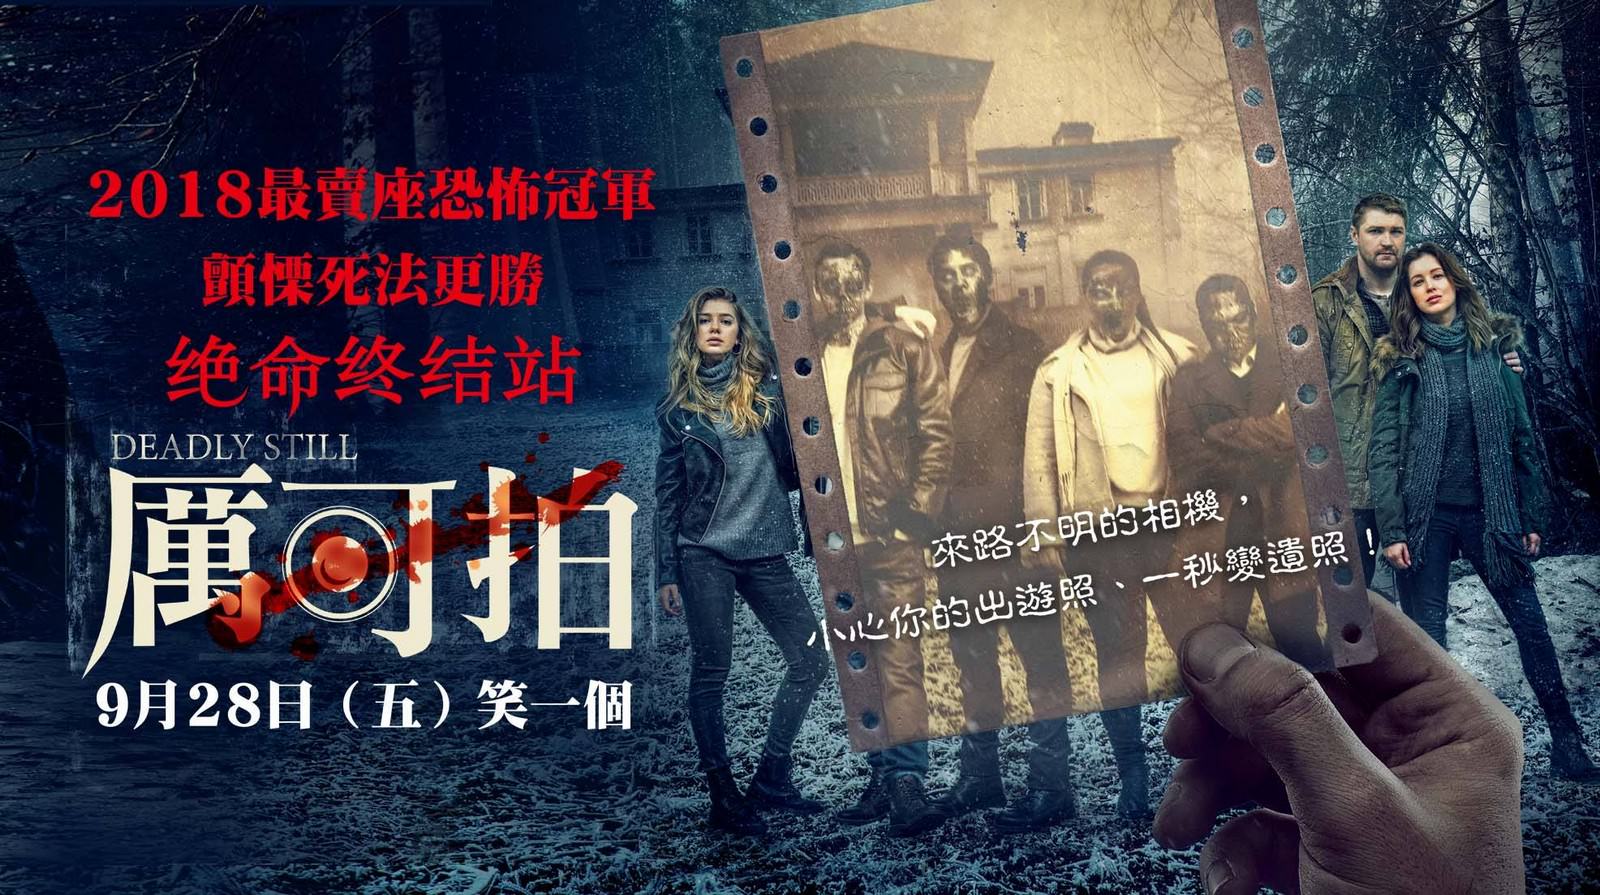 Movie, Фото на память(俄羅斯, 2018) / 厲可拍(台灣) / Deadly Still(英文) / 鬼照片(網路), 電影海報, 台灣, 橫板